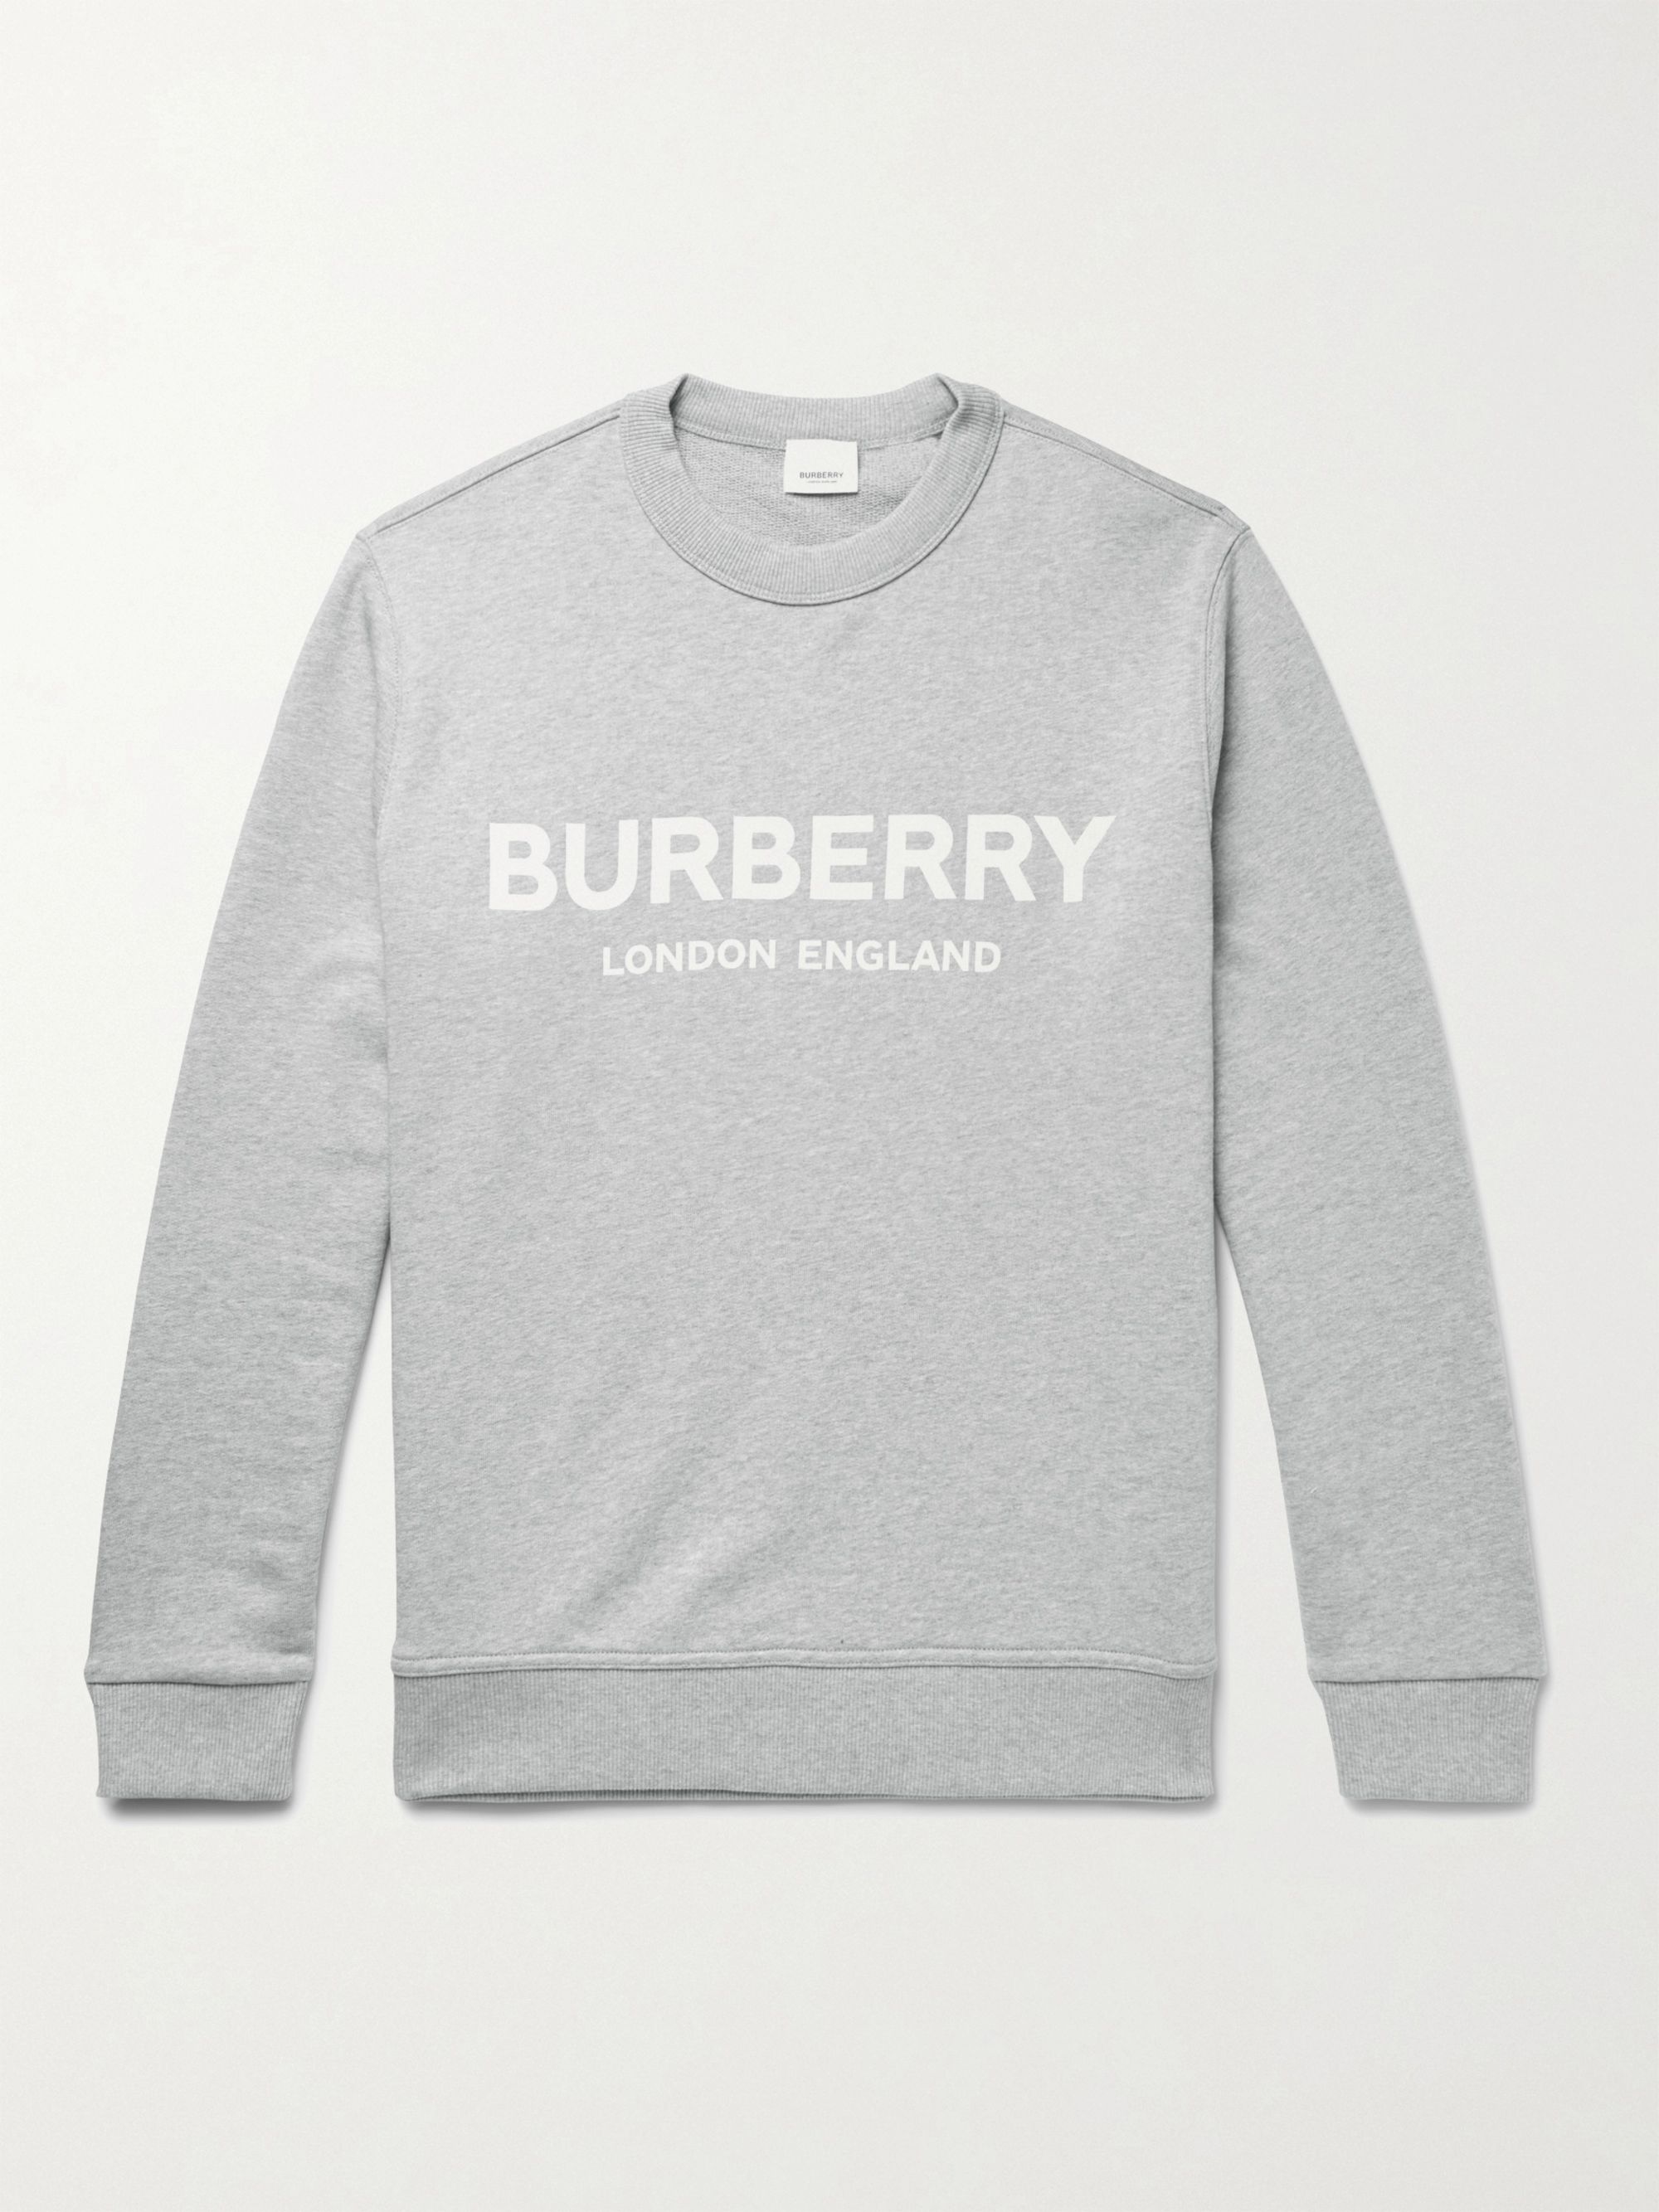 burberry sweatshirt logo